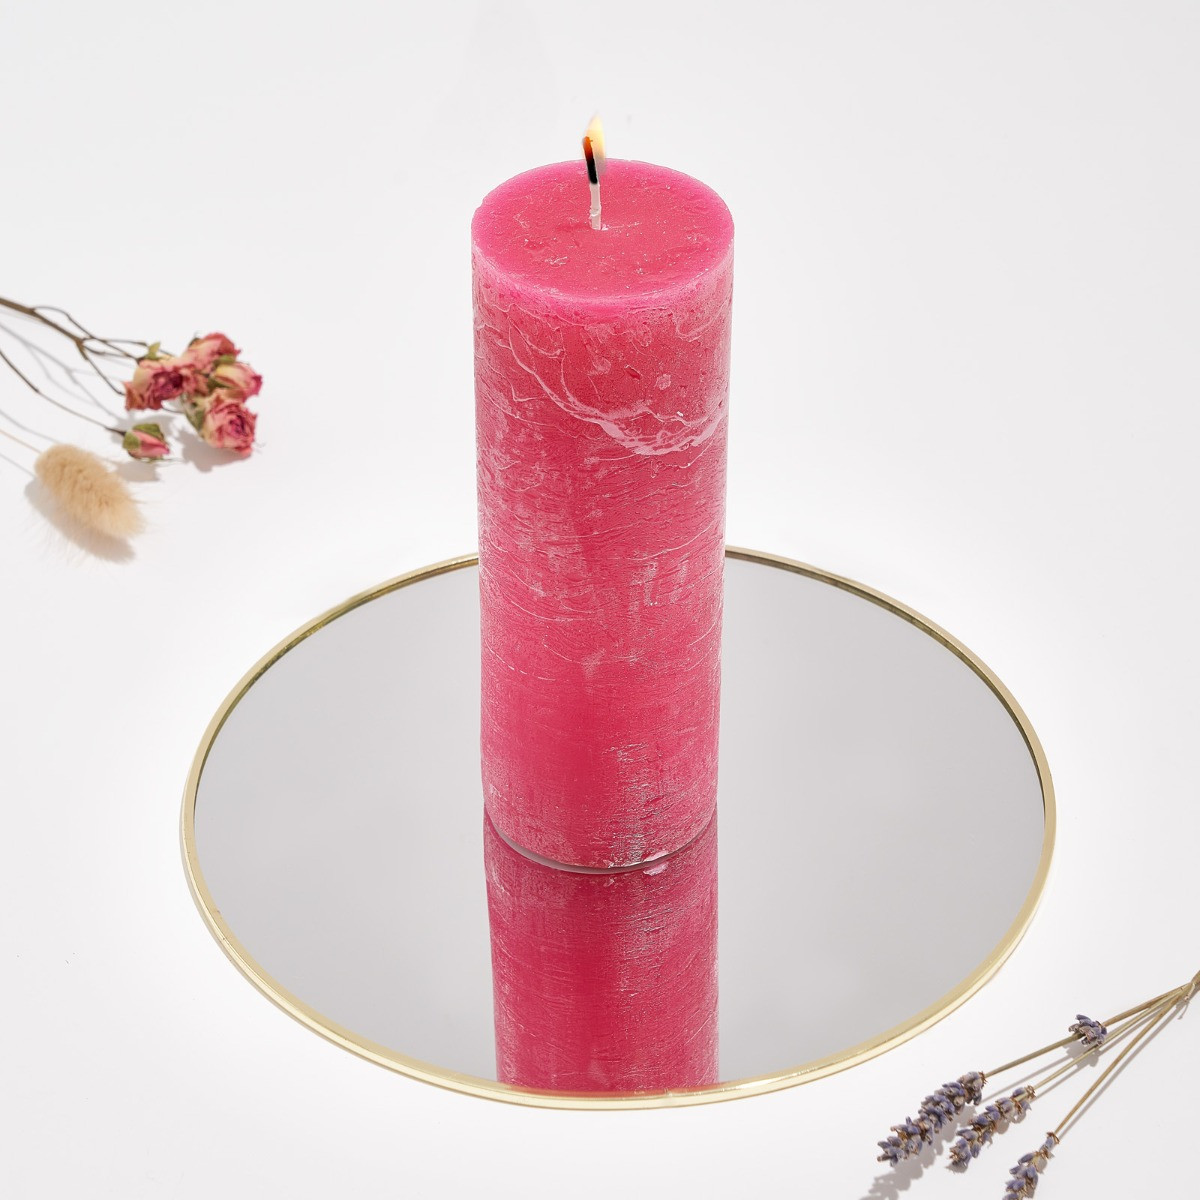 Rustic Pillar Candle, Tall - Rose Pink>